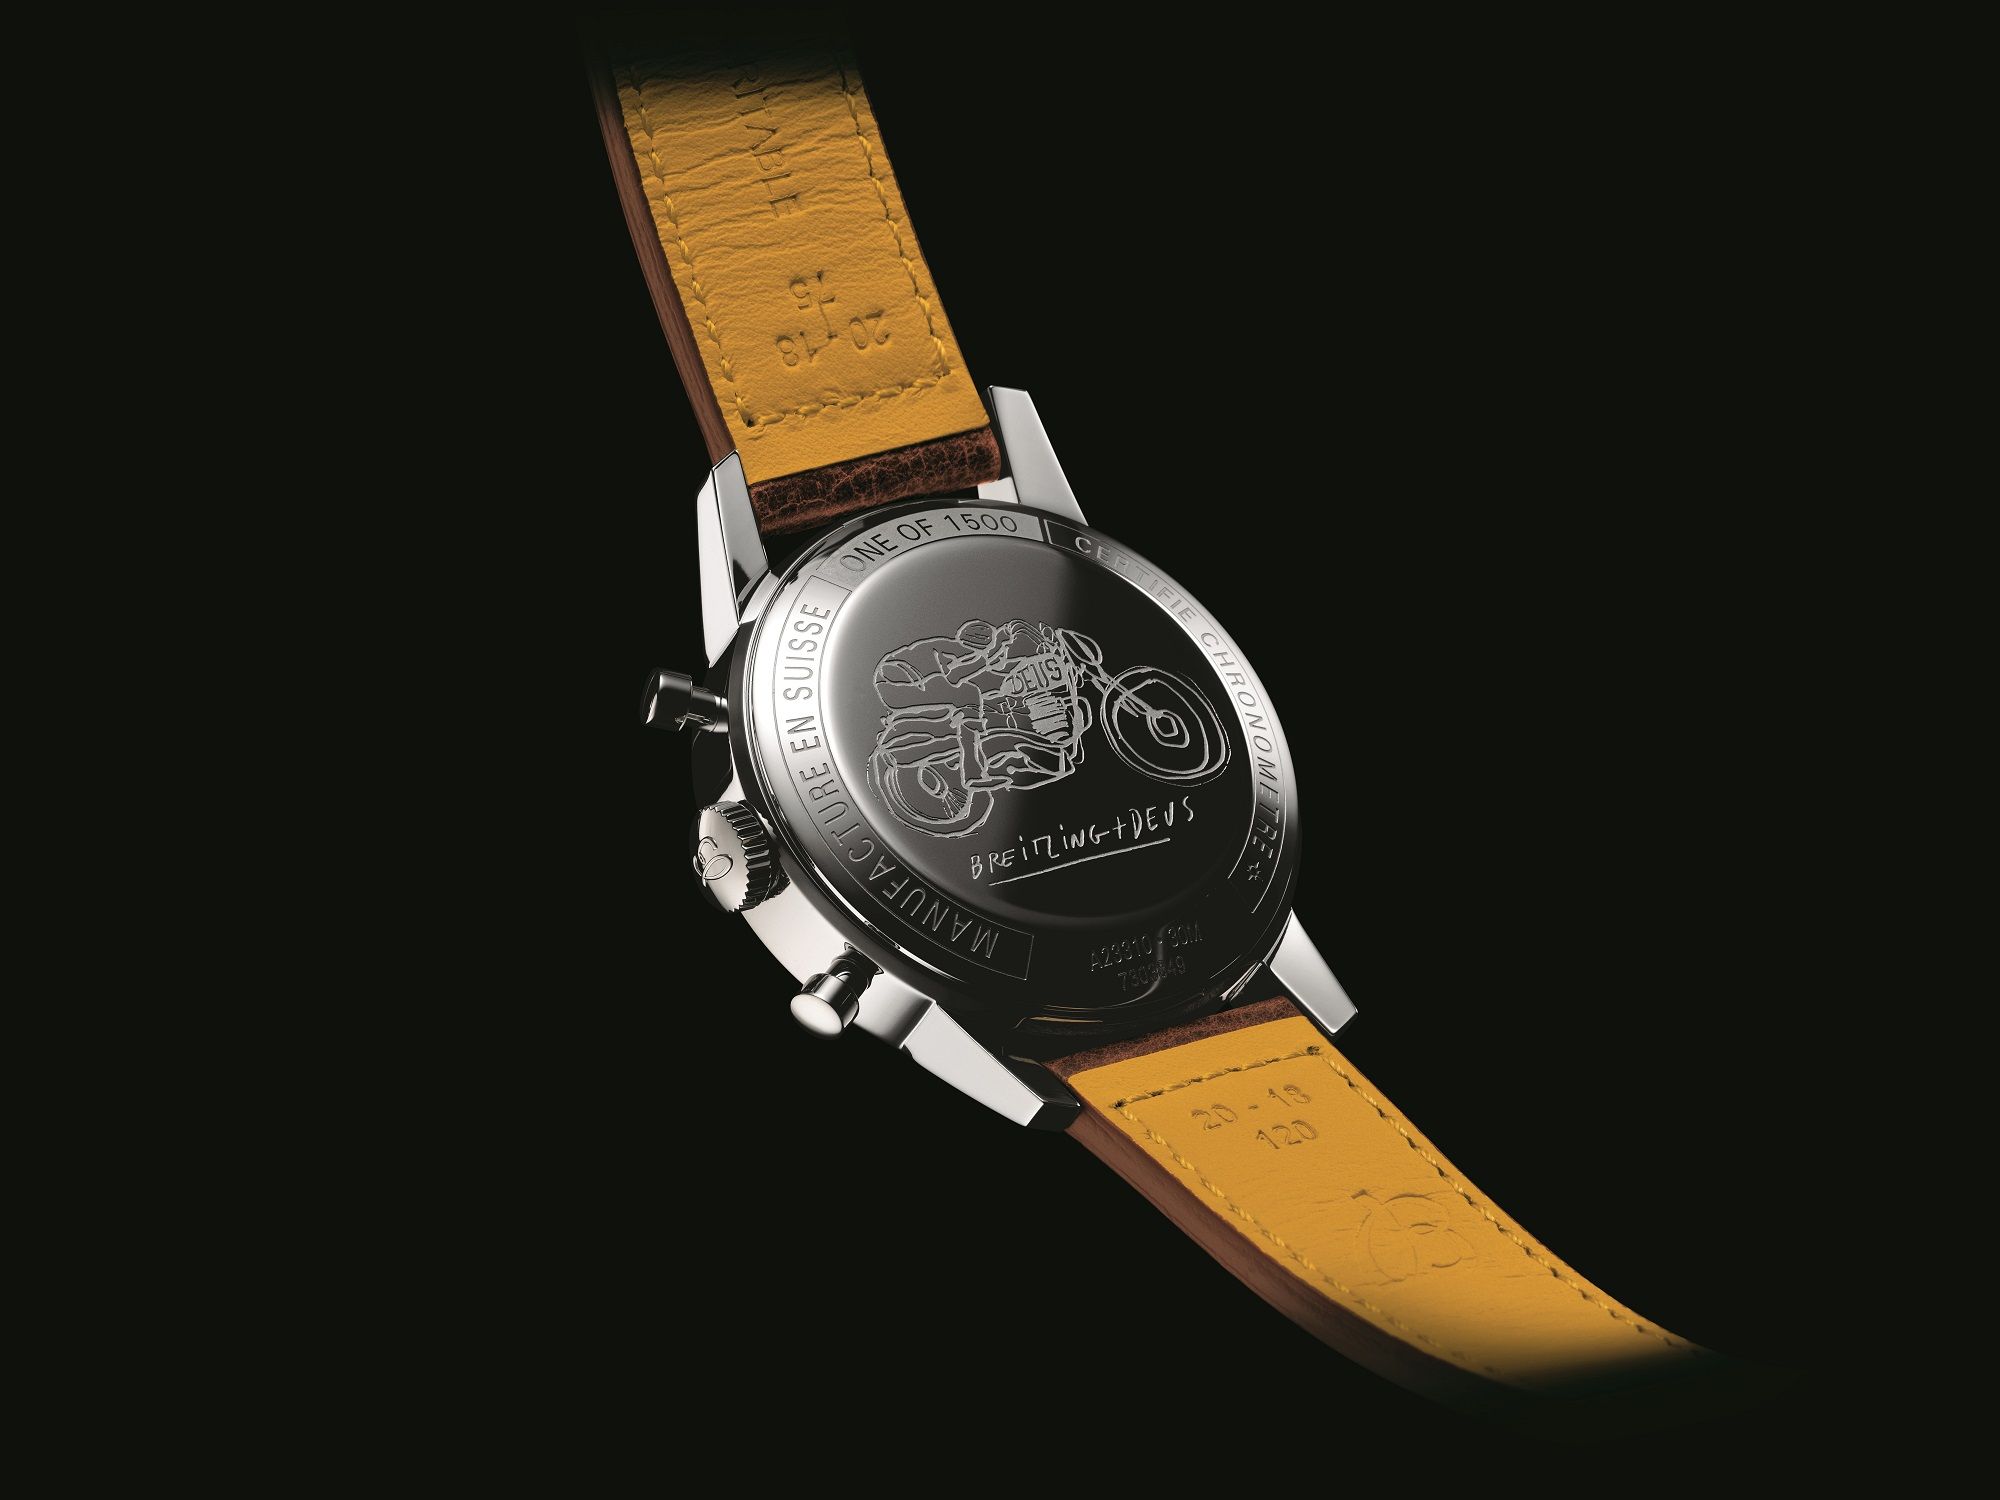 Breitling x Deus: Breitling Top Time Deus Limited Edition - Watch